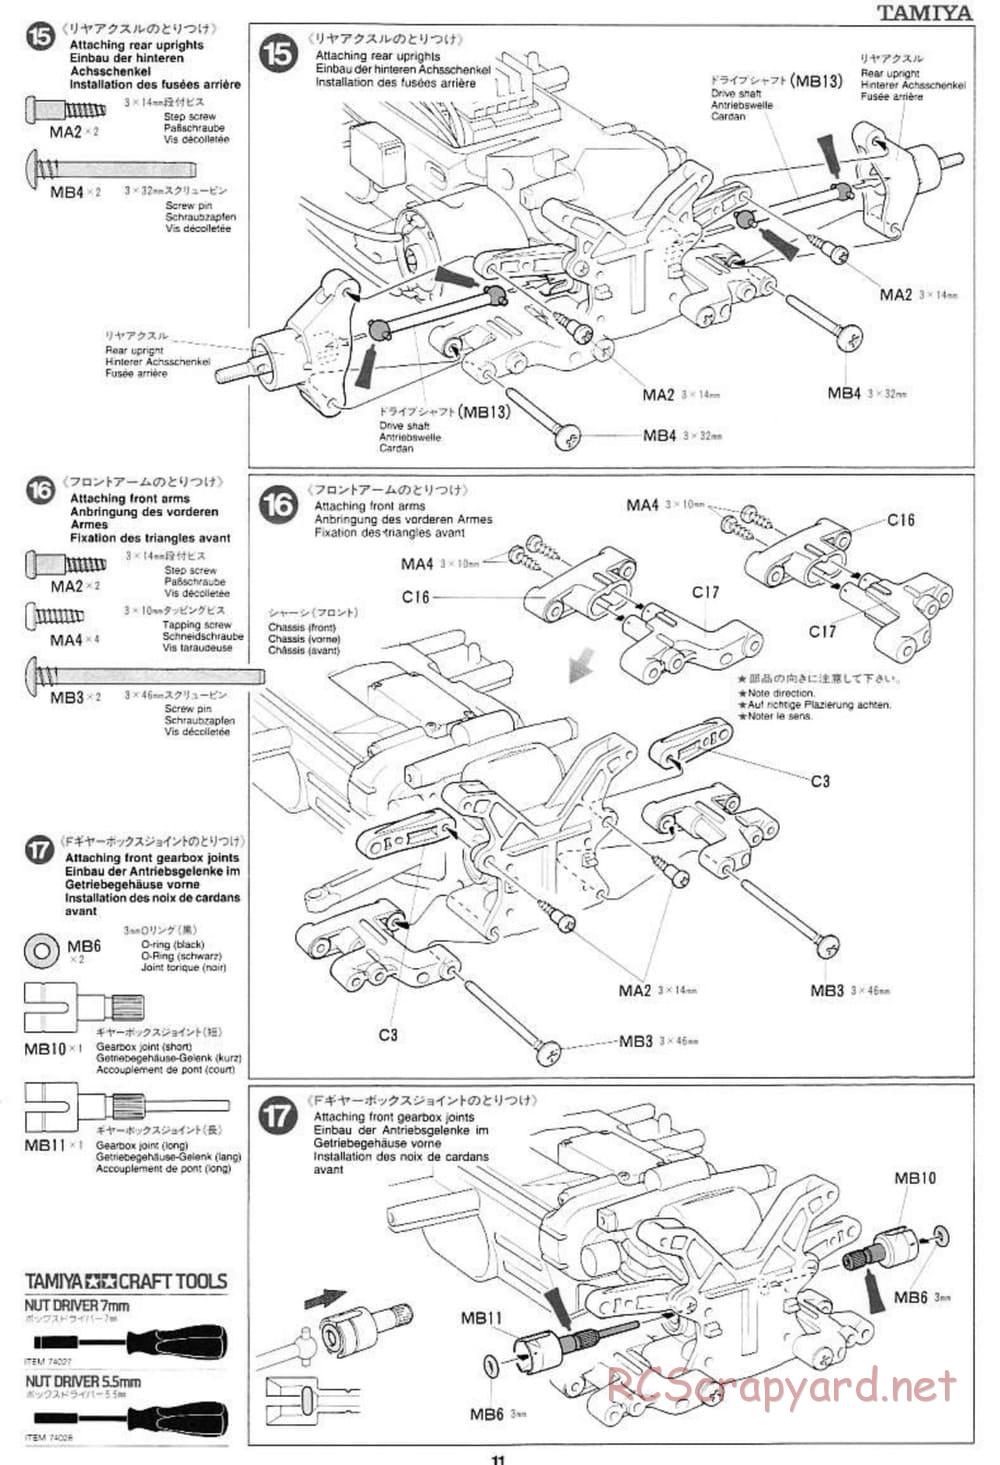 Tamiya - Subaru Impreza WRC - TL-01 Chassis - Manual - Page 11